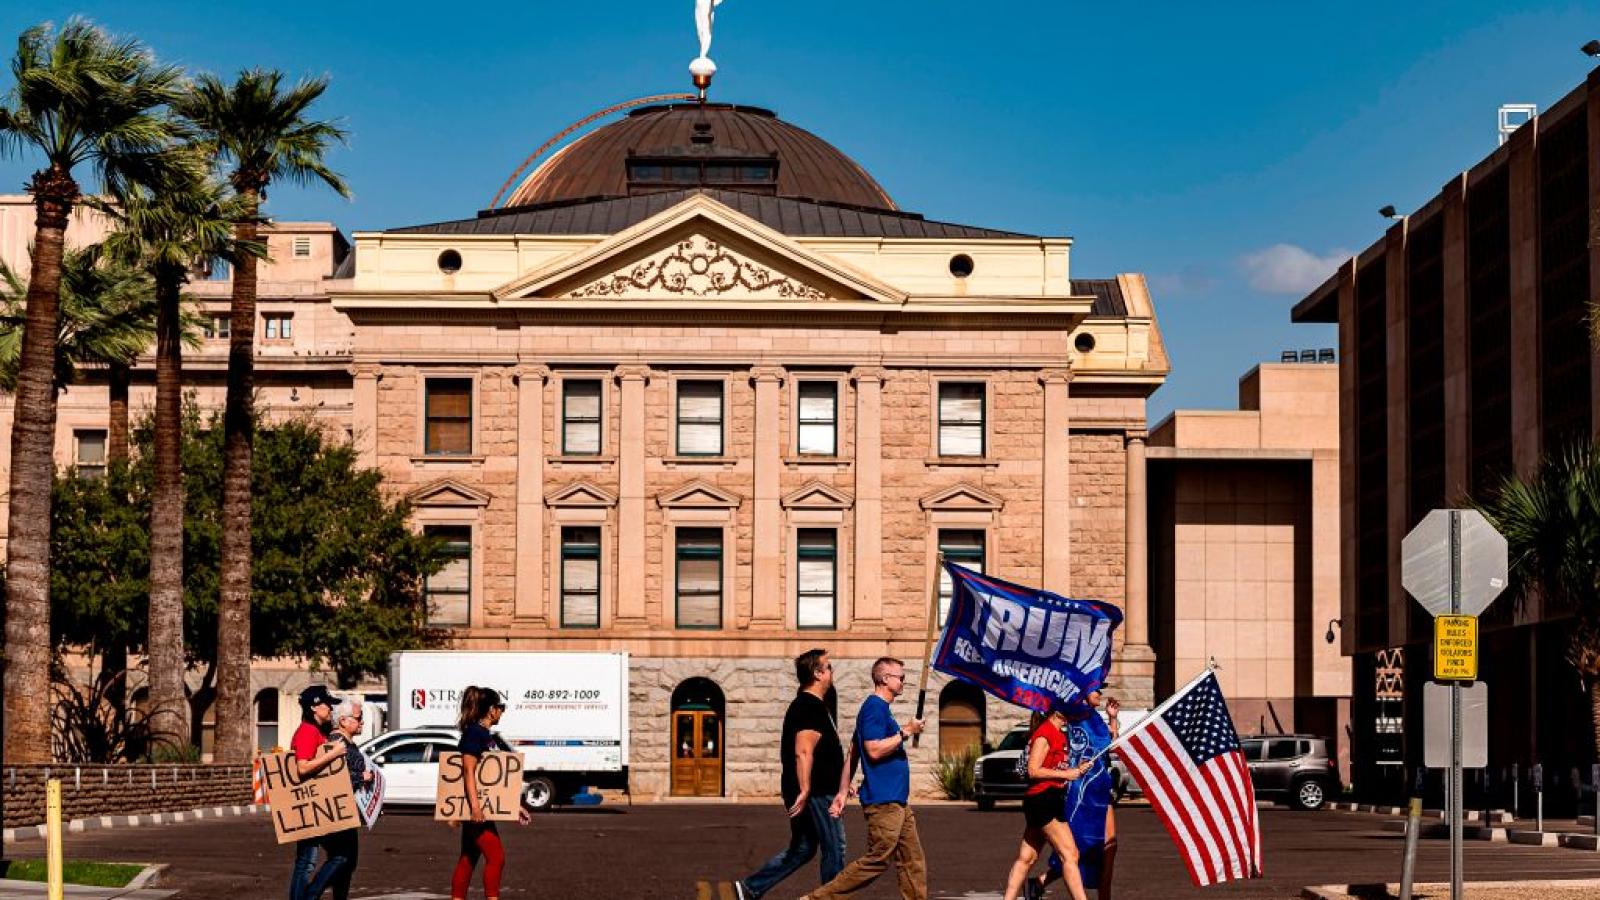 The Arizona state capitol